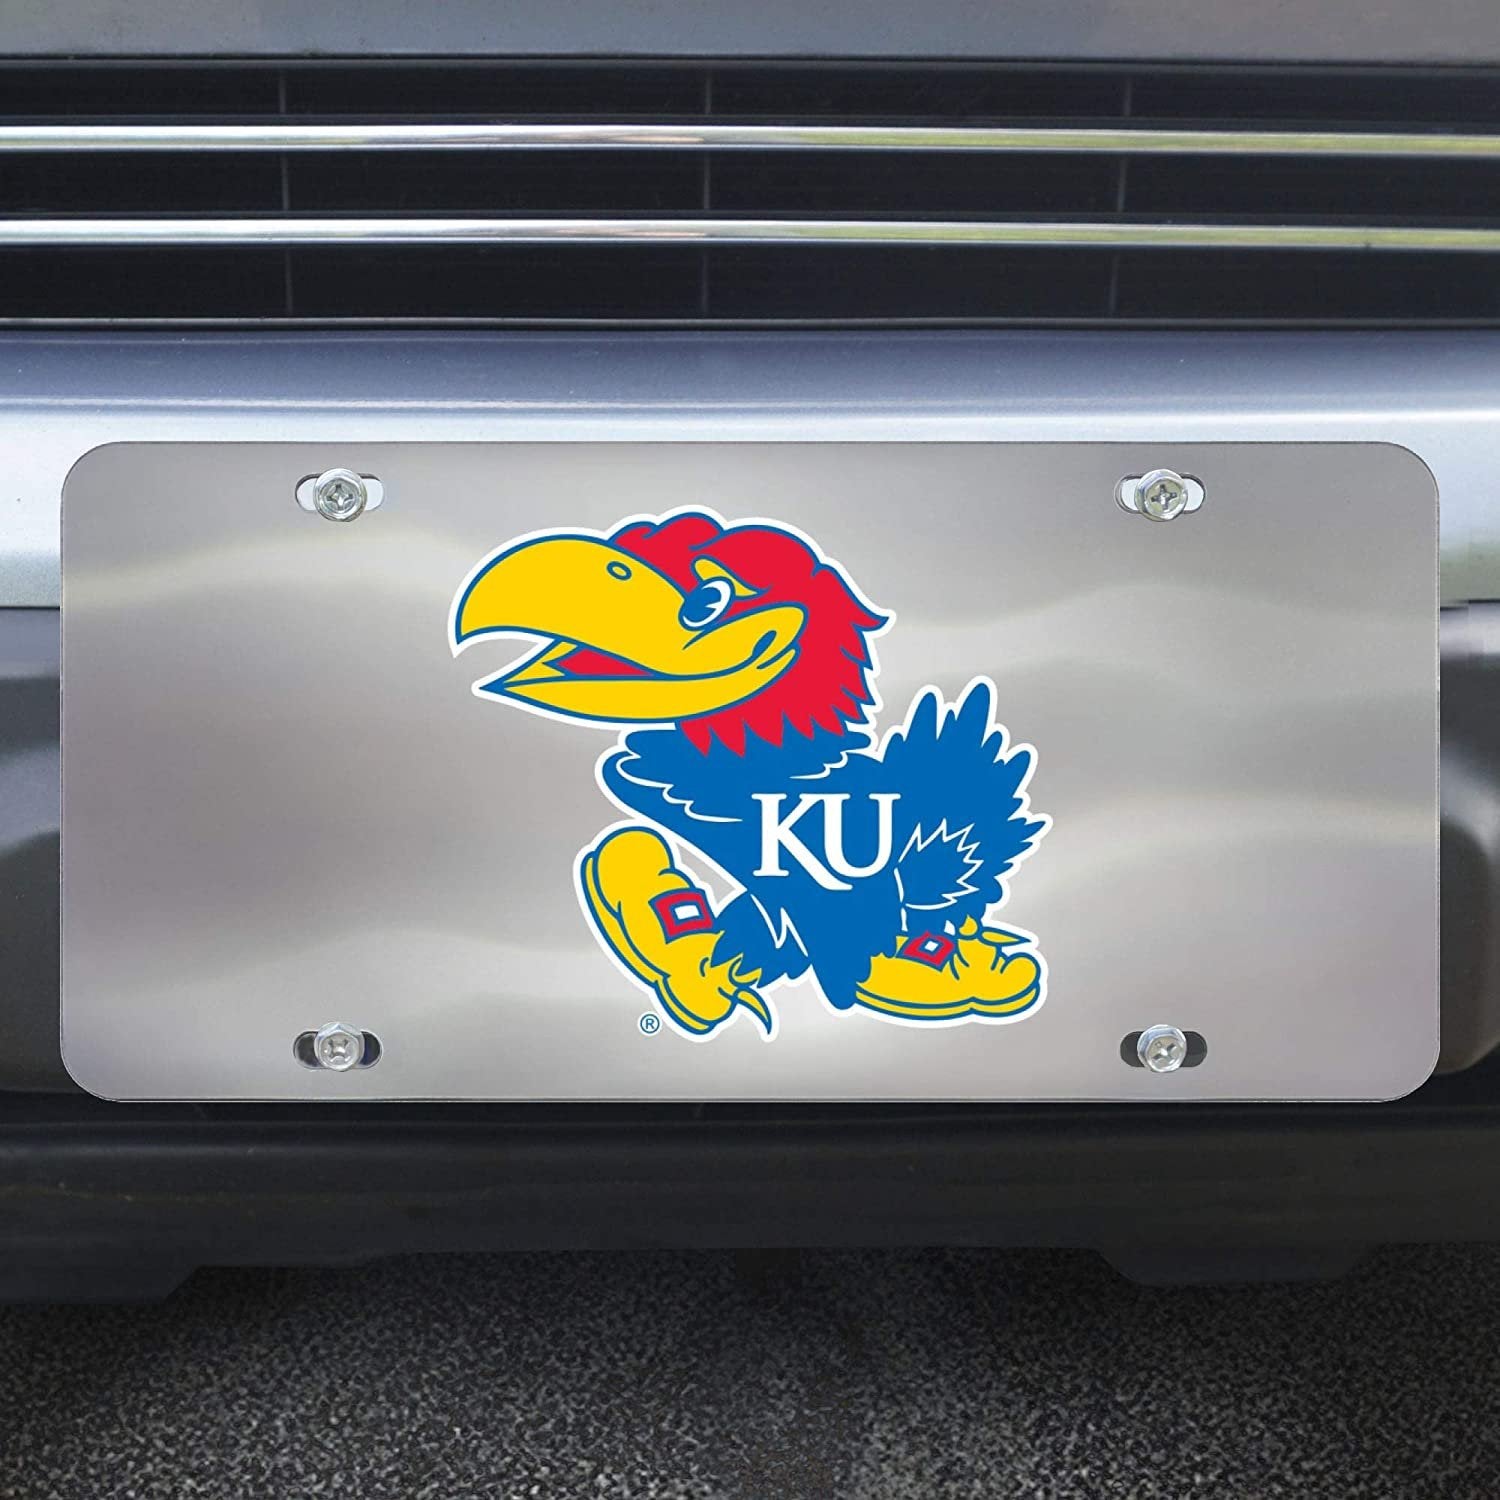 University of Kansas Jayhawks License Plate Tag, Premium Stainless Steel Diecast, Chrome, Raised Solid Metal Color Emblem, 6x12 Inch